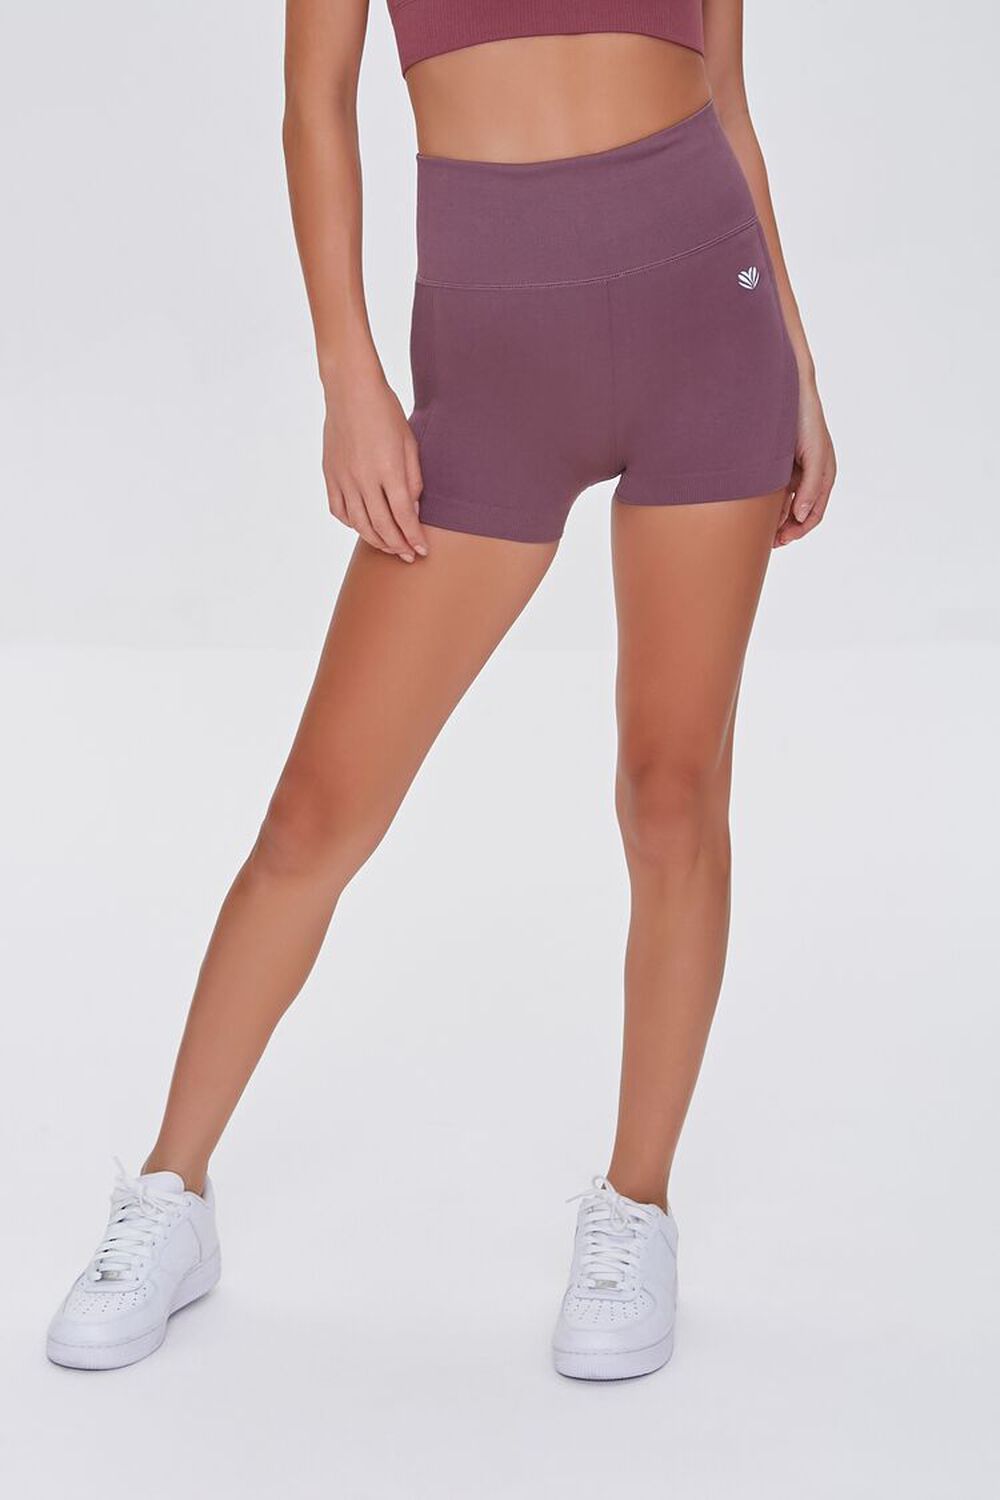 PURPLE Active High-Waist Shorts, image 2